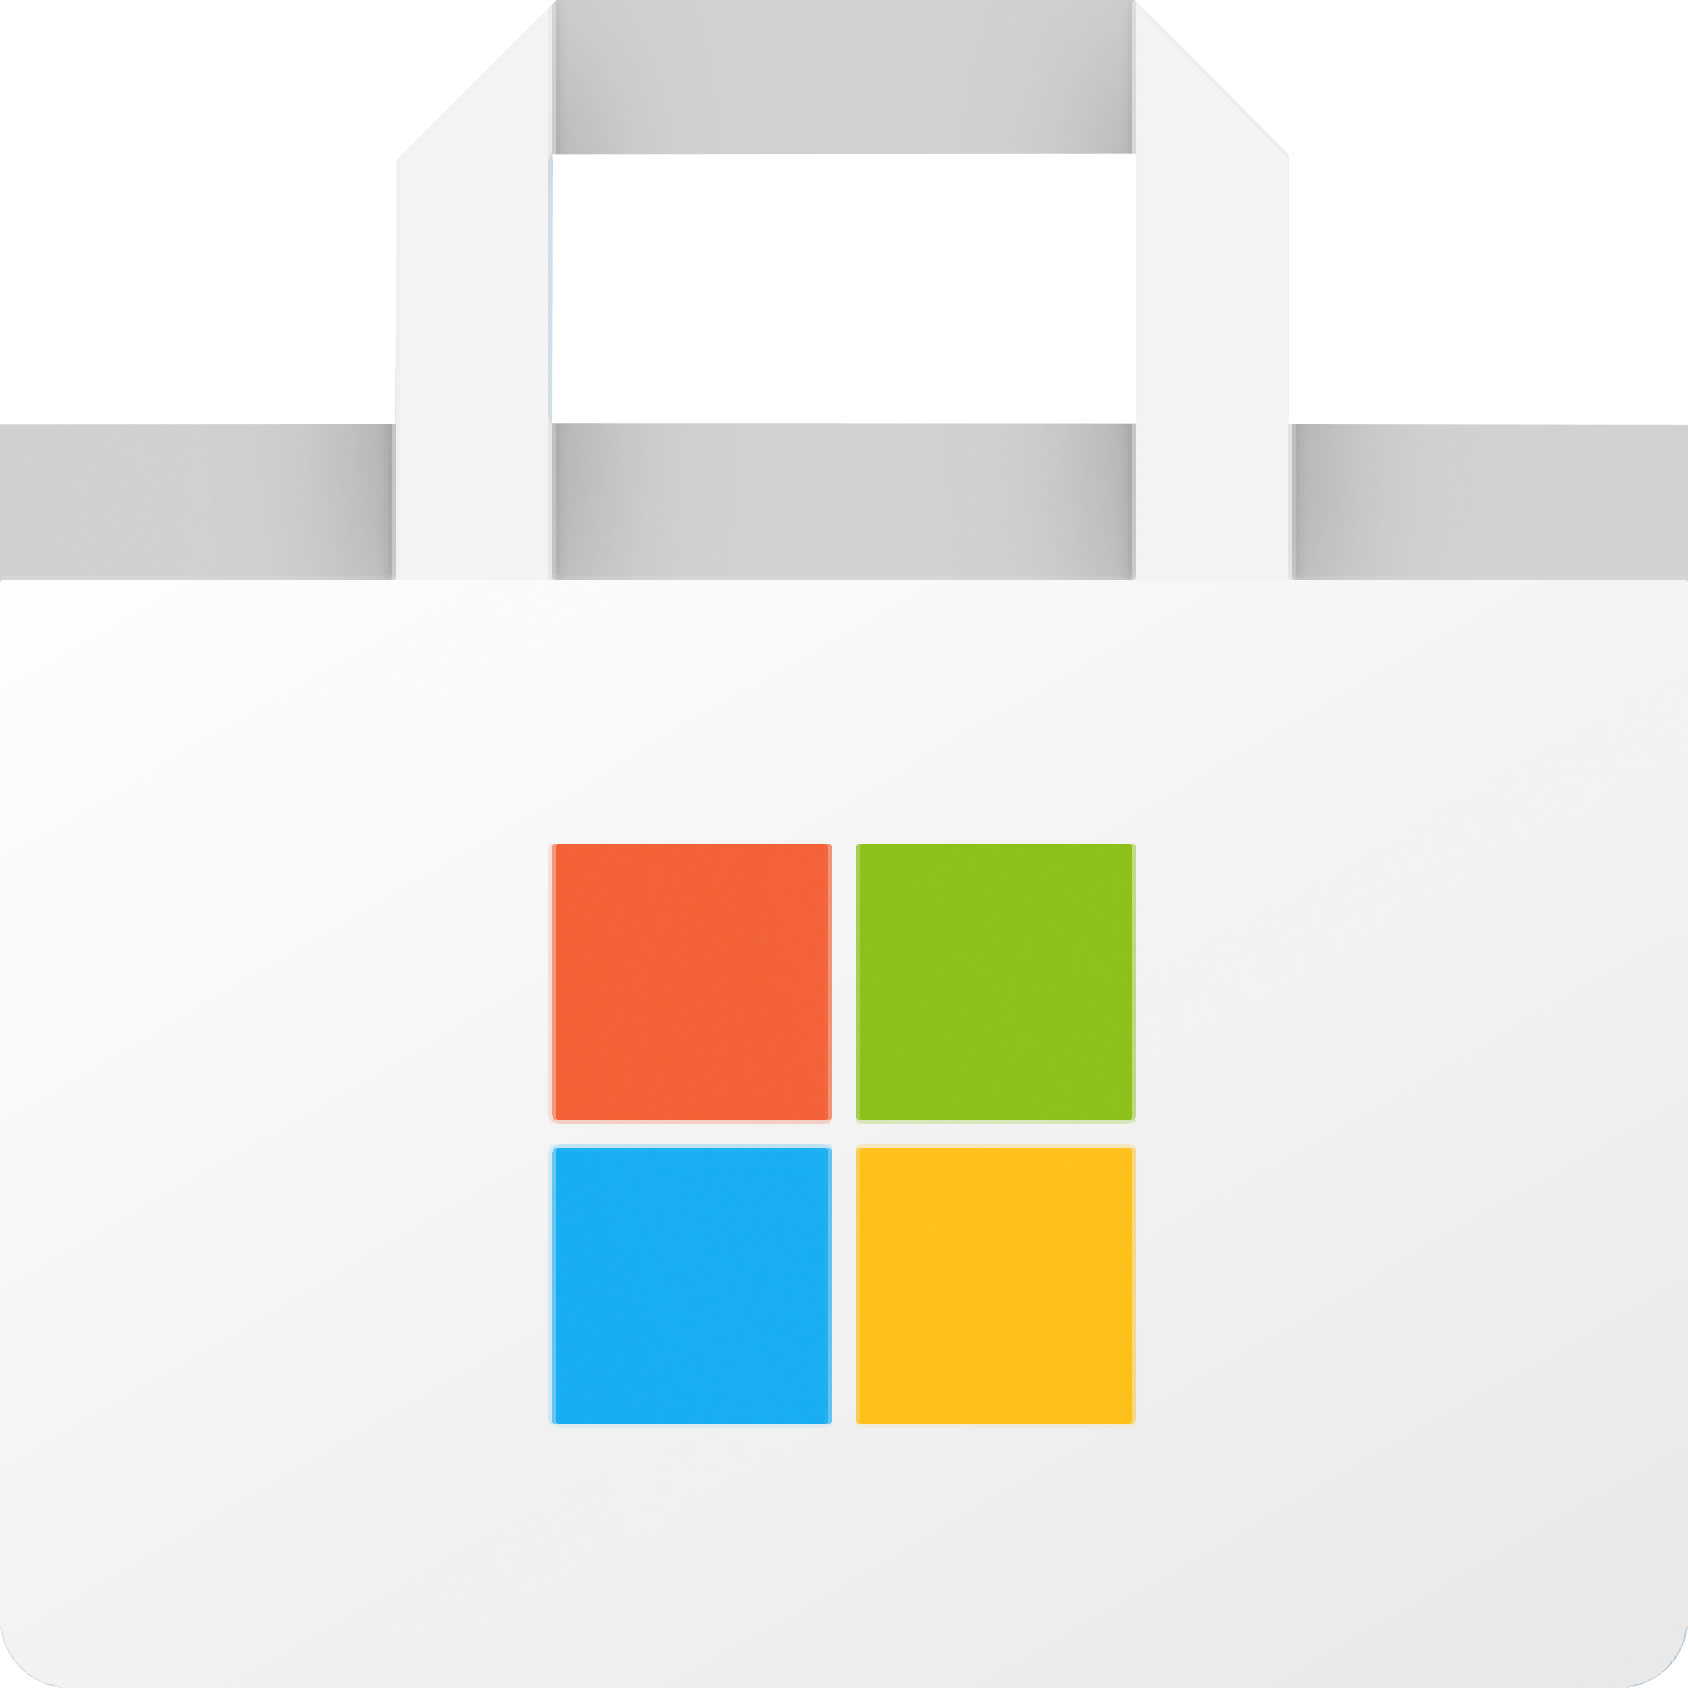 Windows Store icon